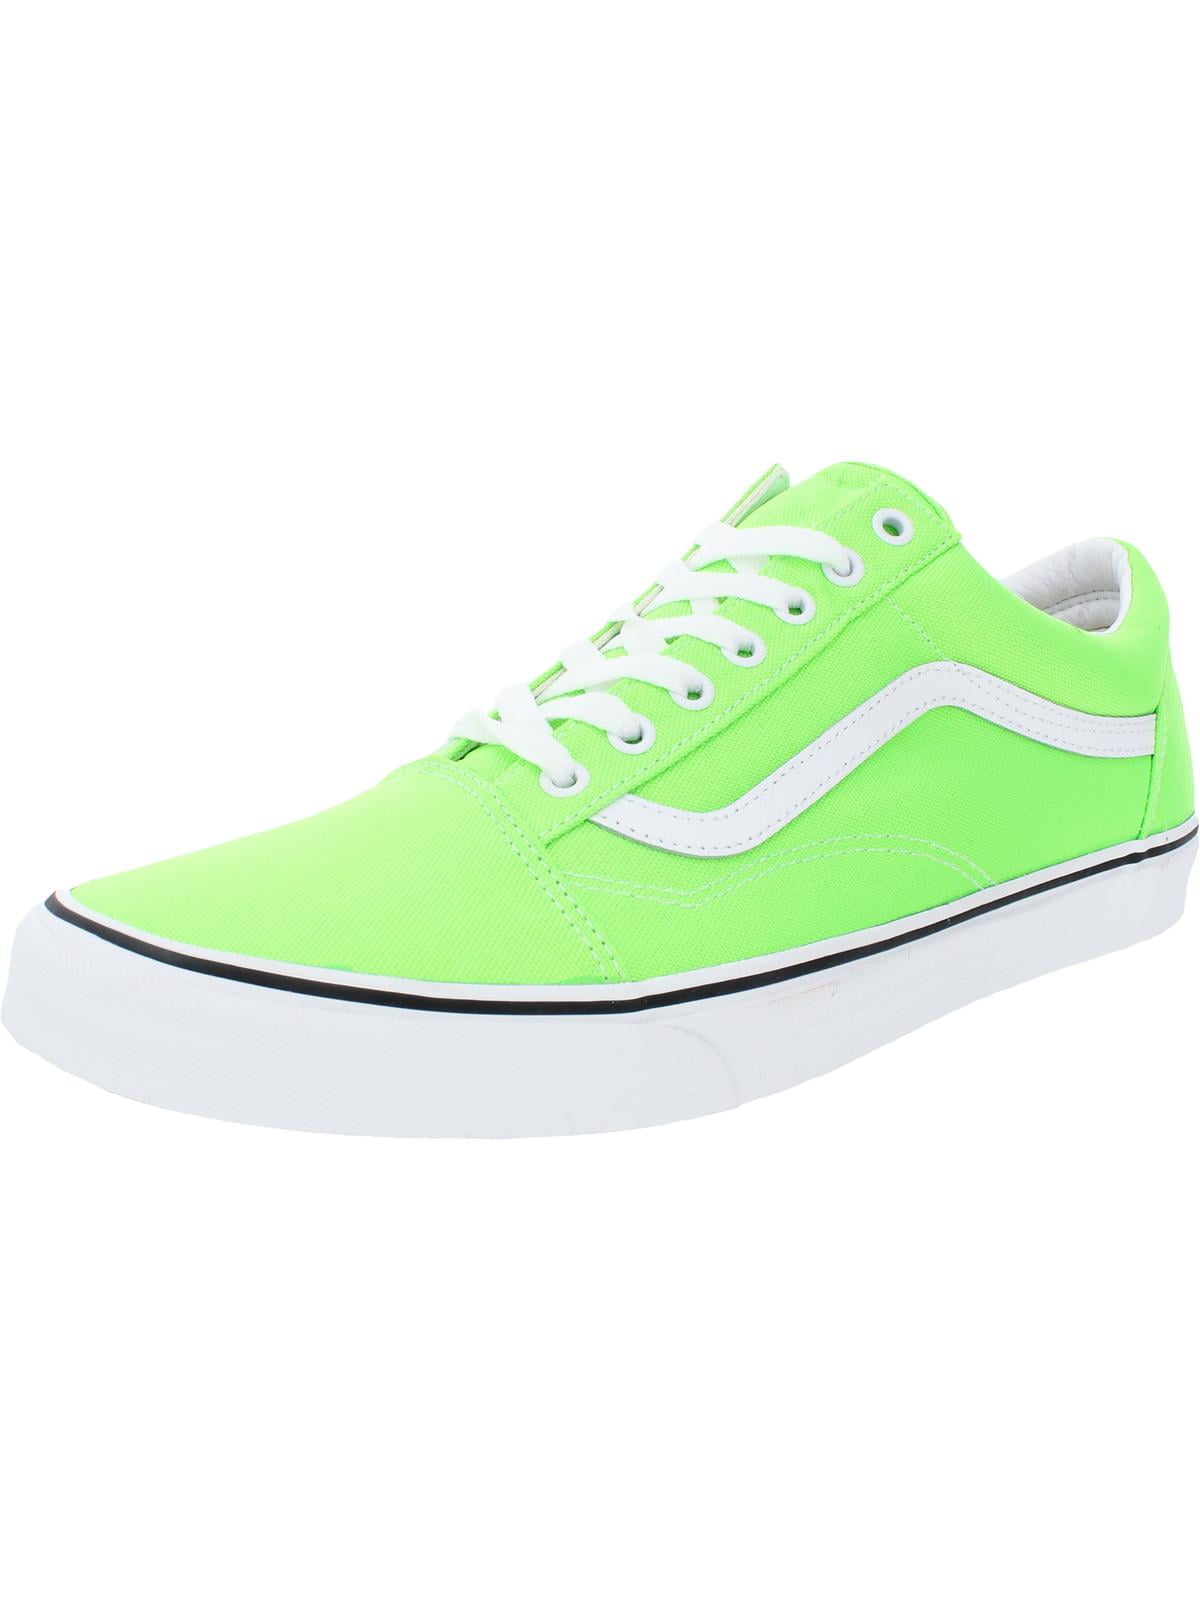 green vans womens shoes